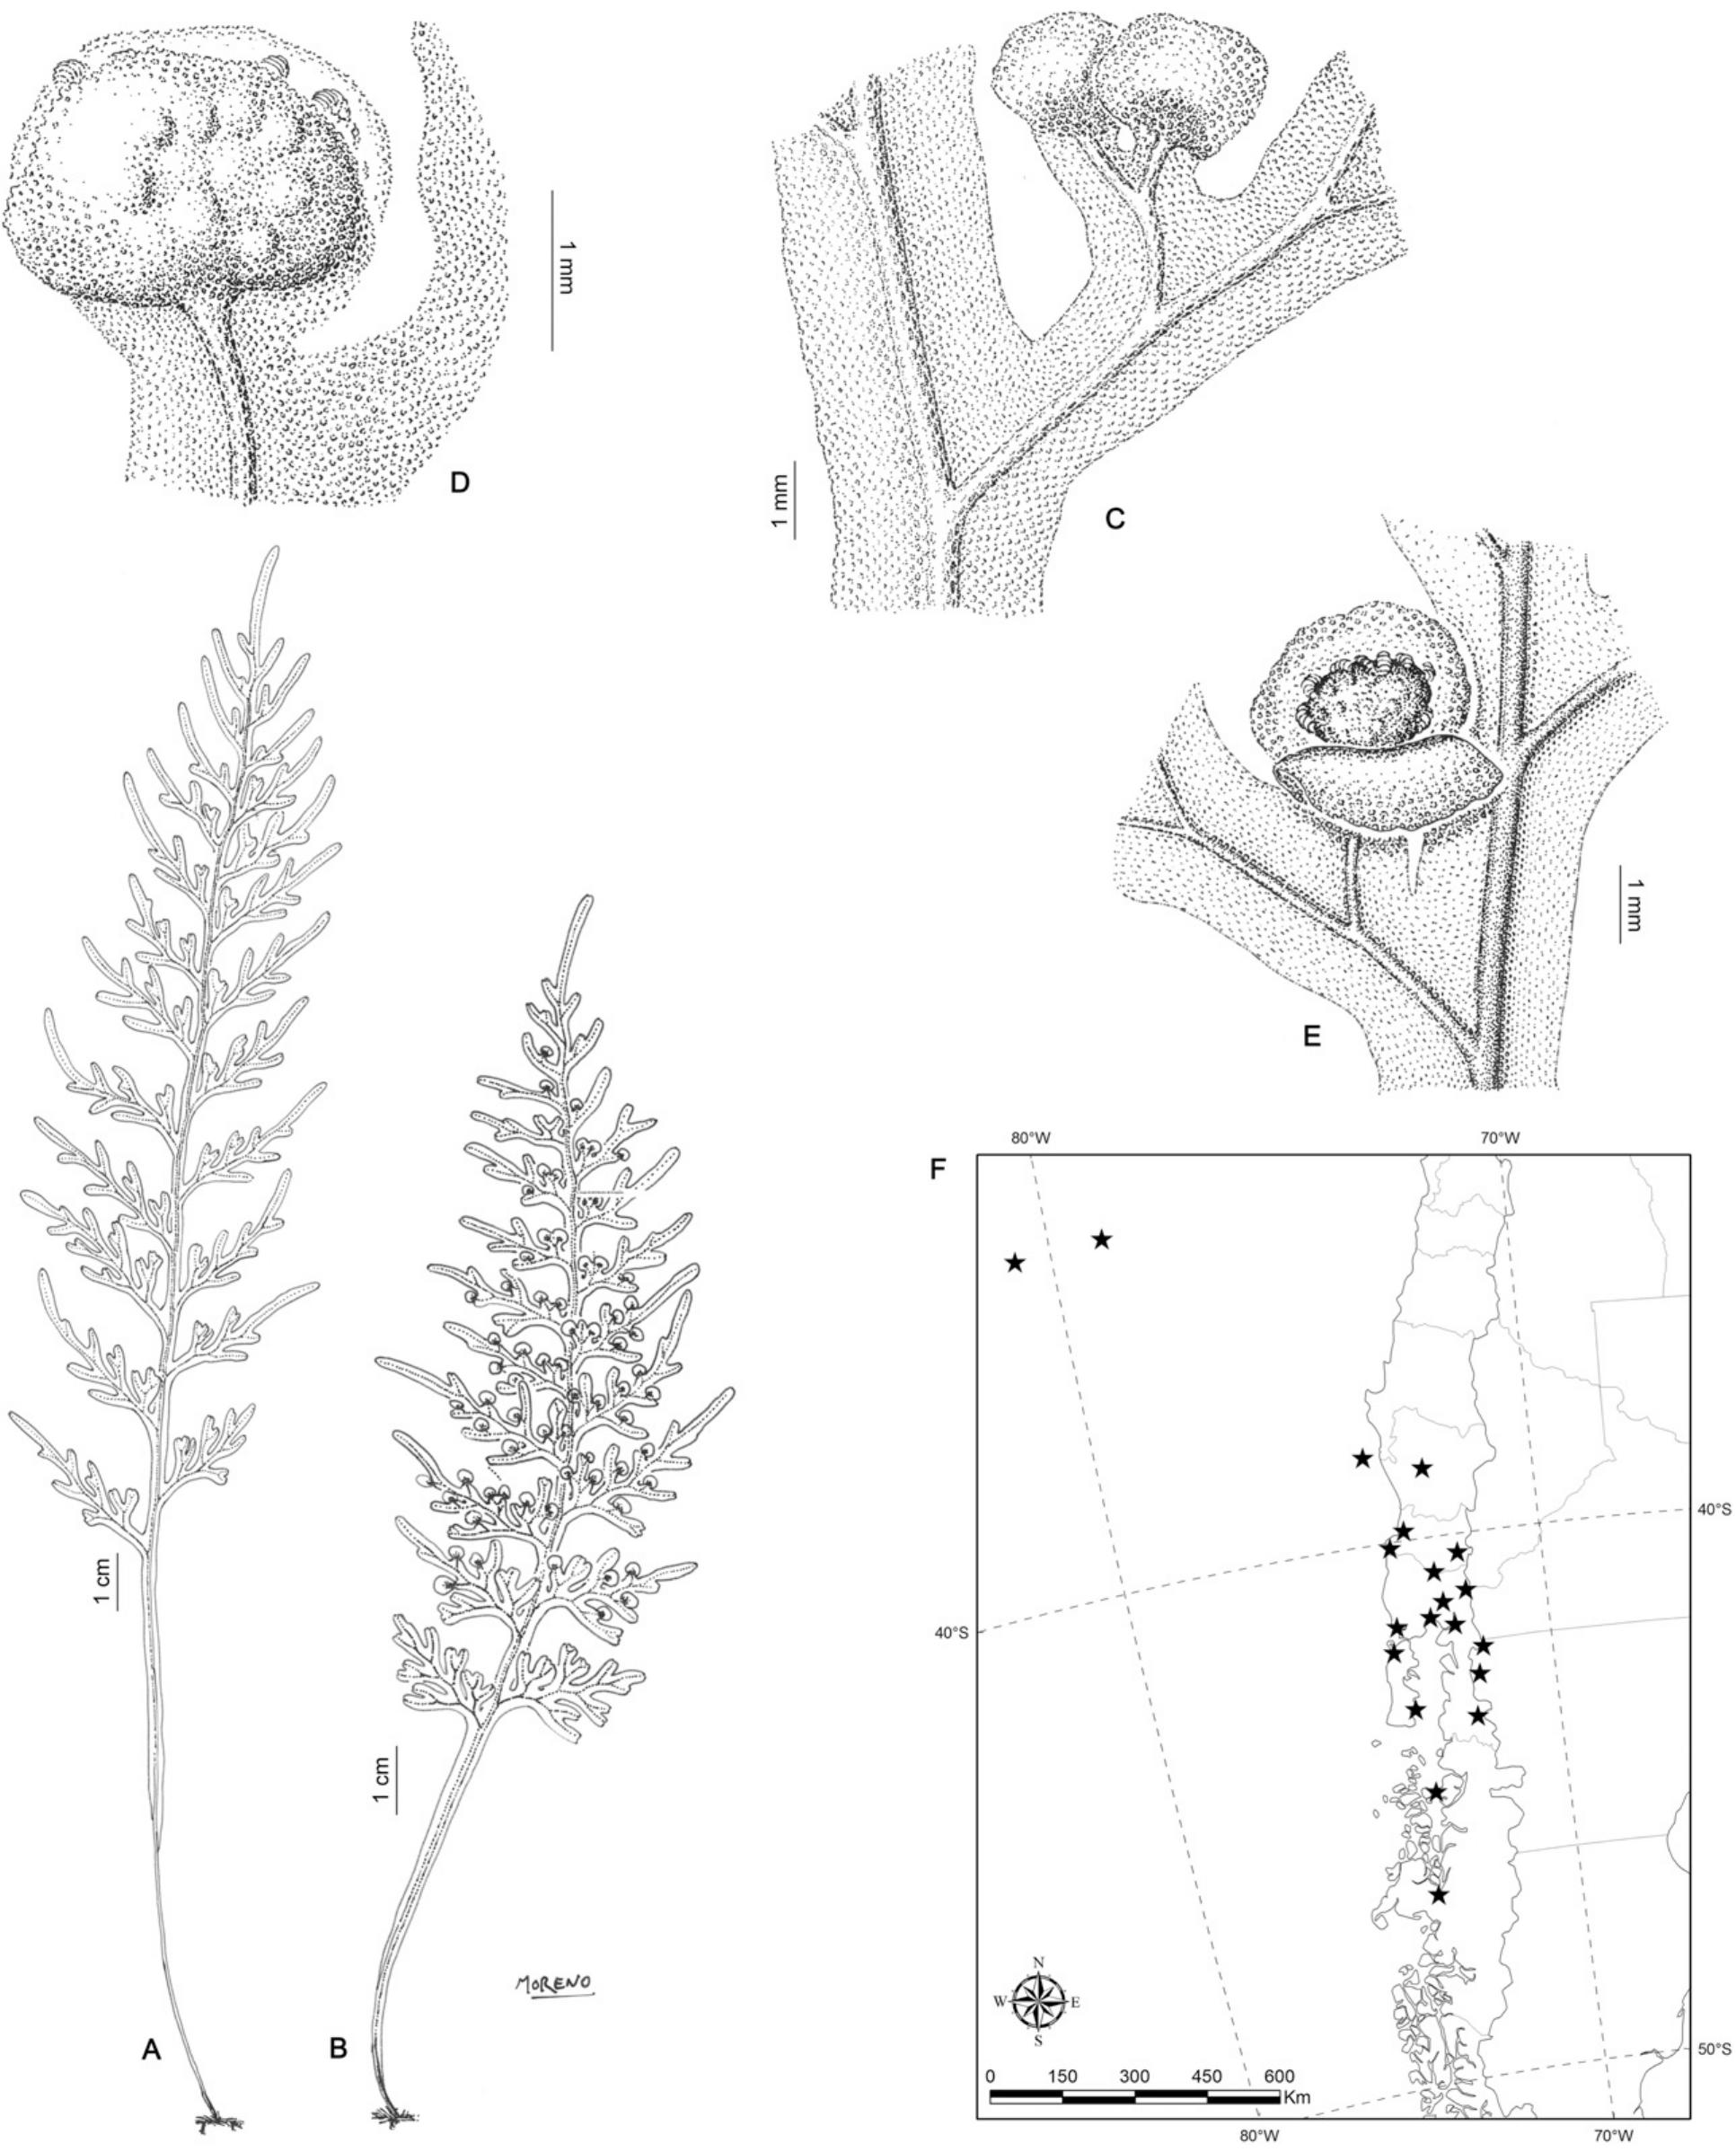 Morphological and molecular study of Didymodiclinus marginati n